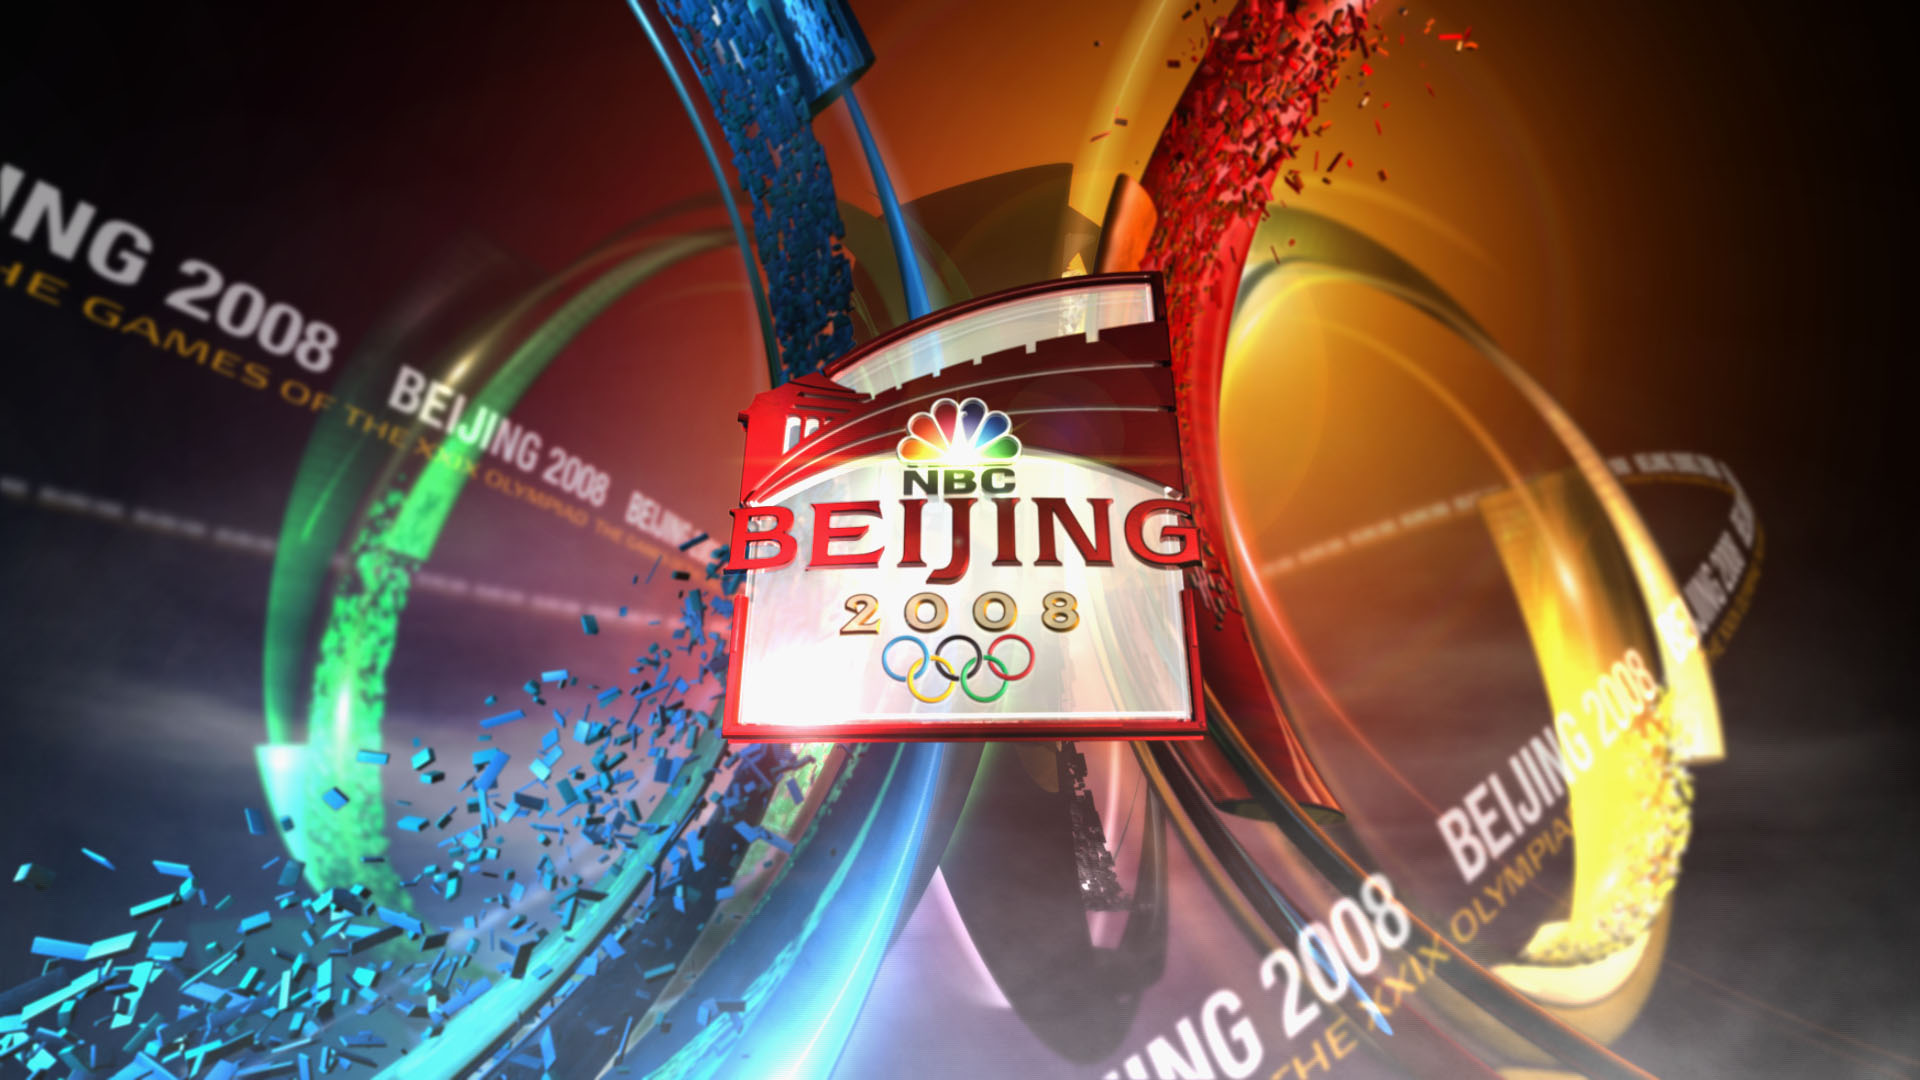 Beijing 2008 – NBC Olympics